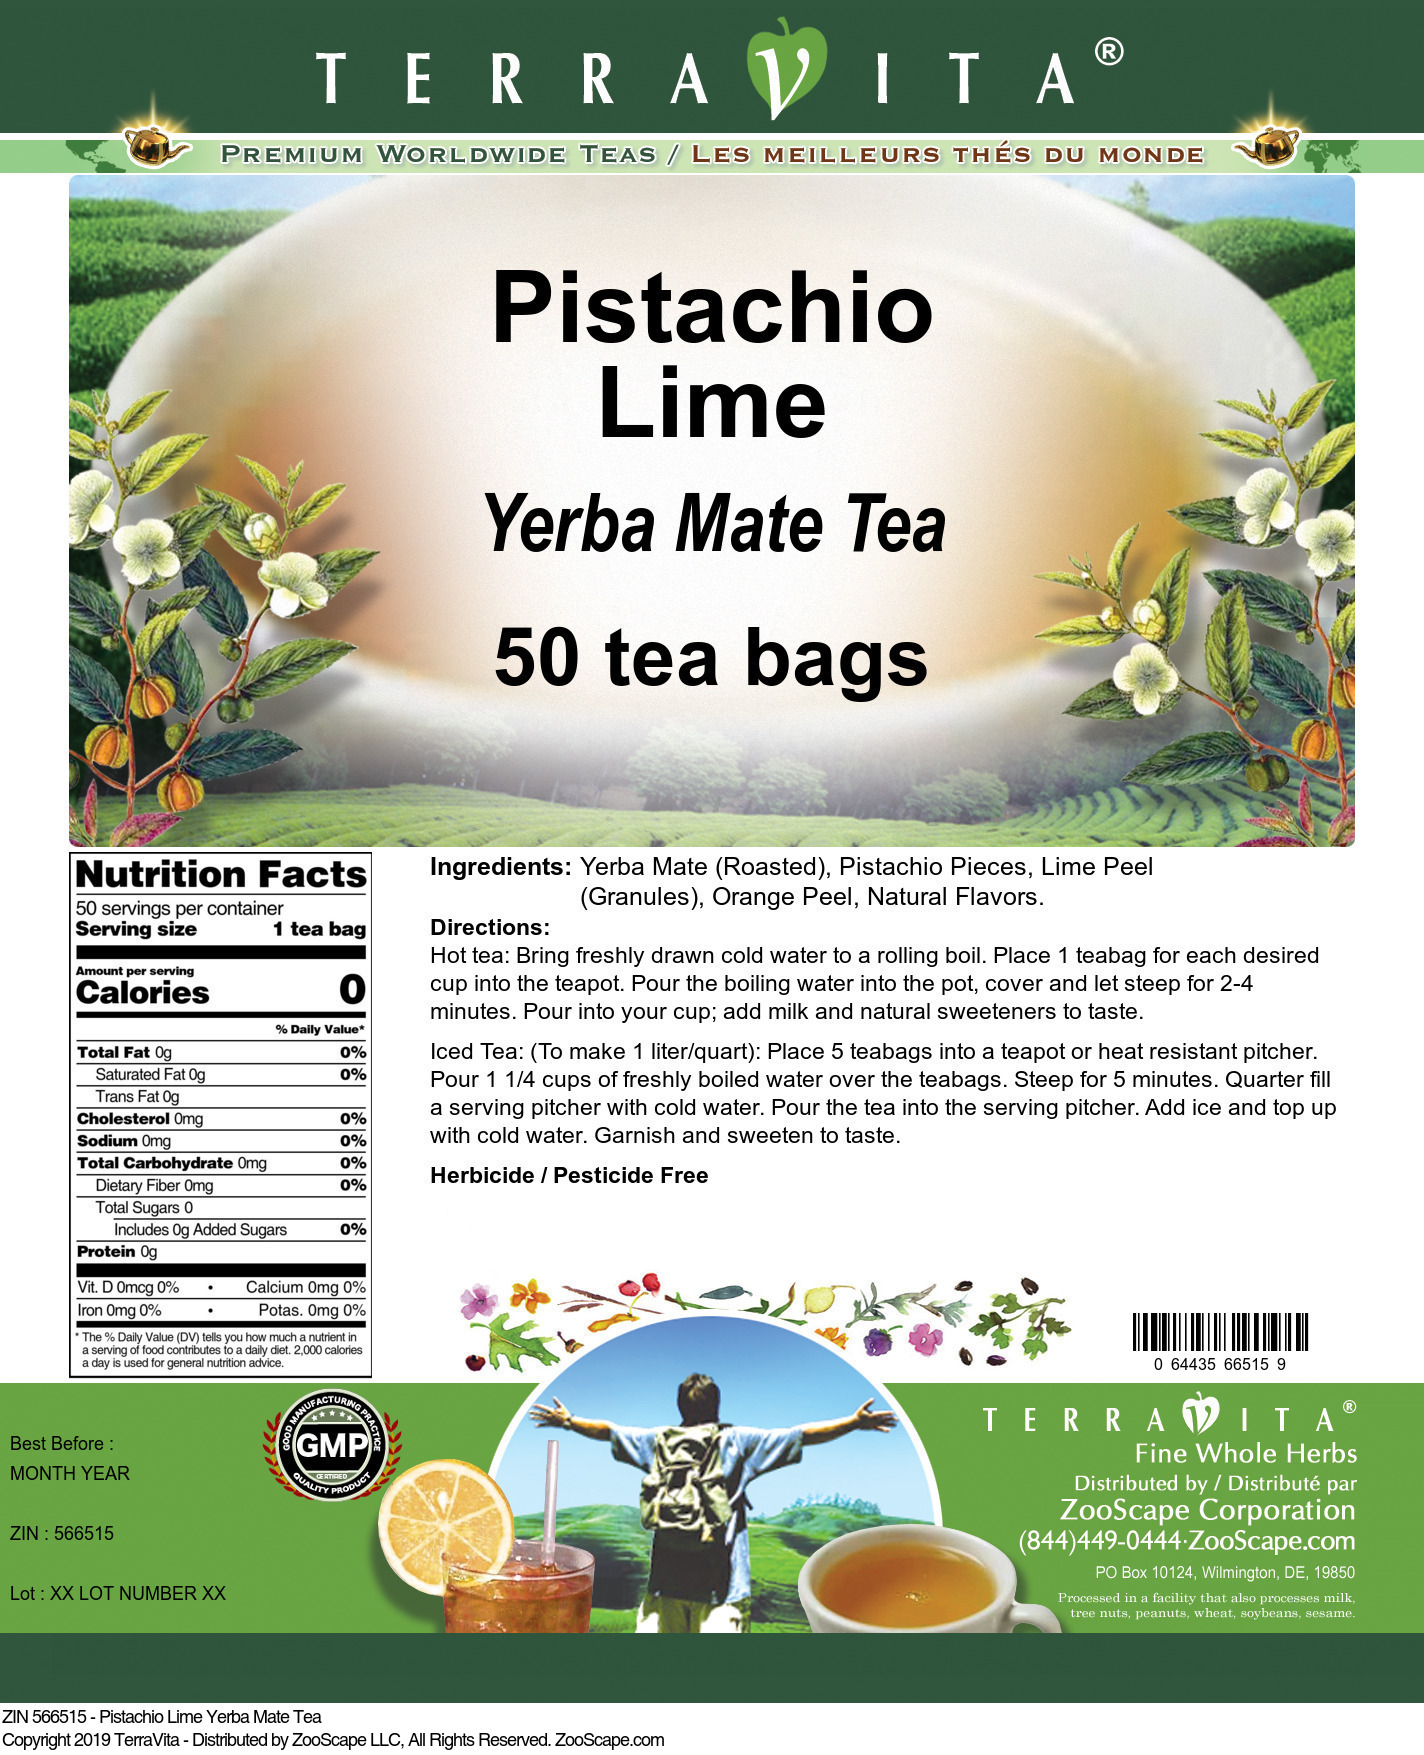 Pistachio Lime Yerba Mate Tea - Label